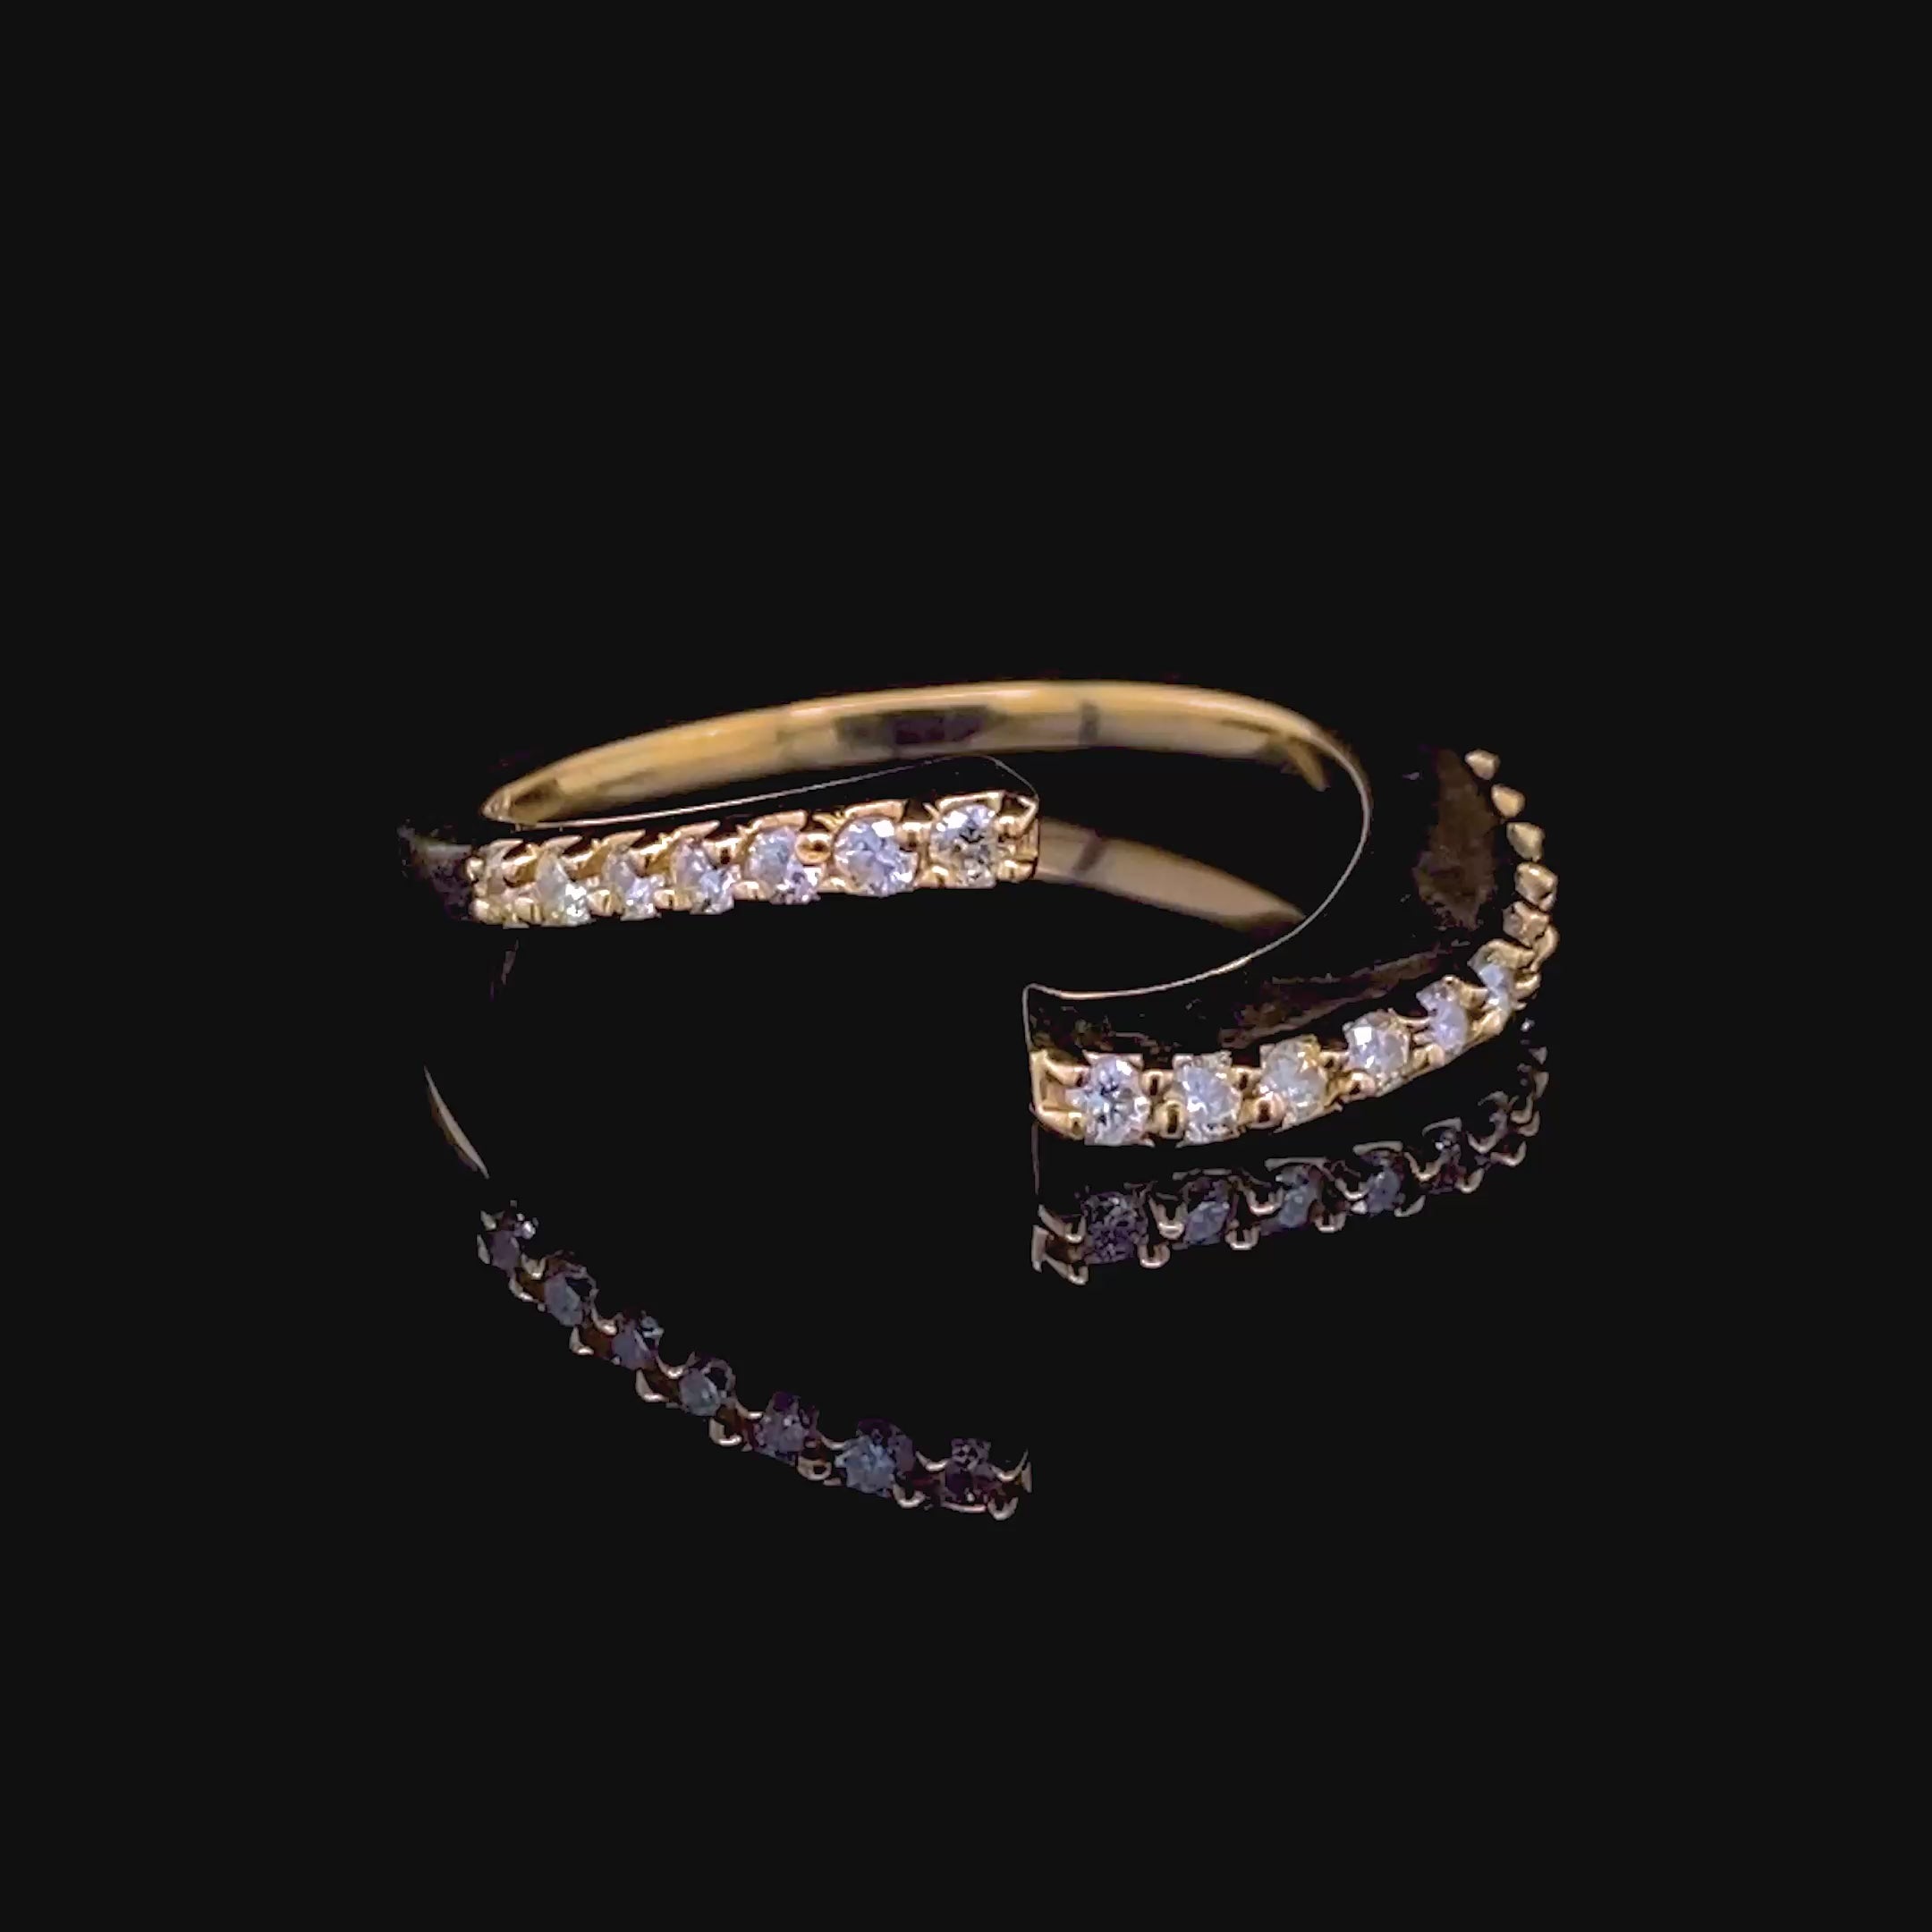 Bargain 0.20CT Round Cut Diamond Wedding Ring in 14KT Yellow Gold